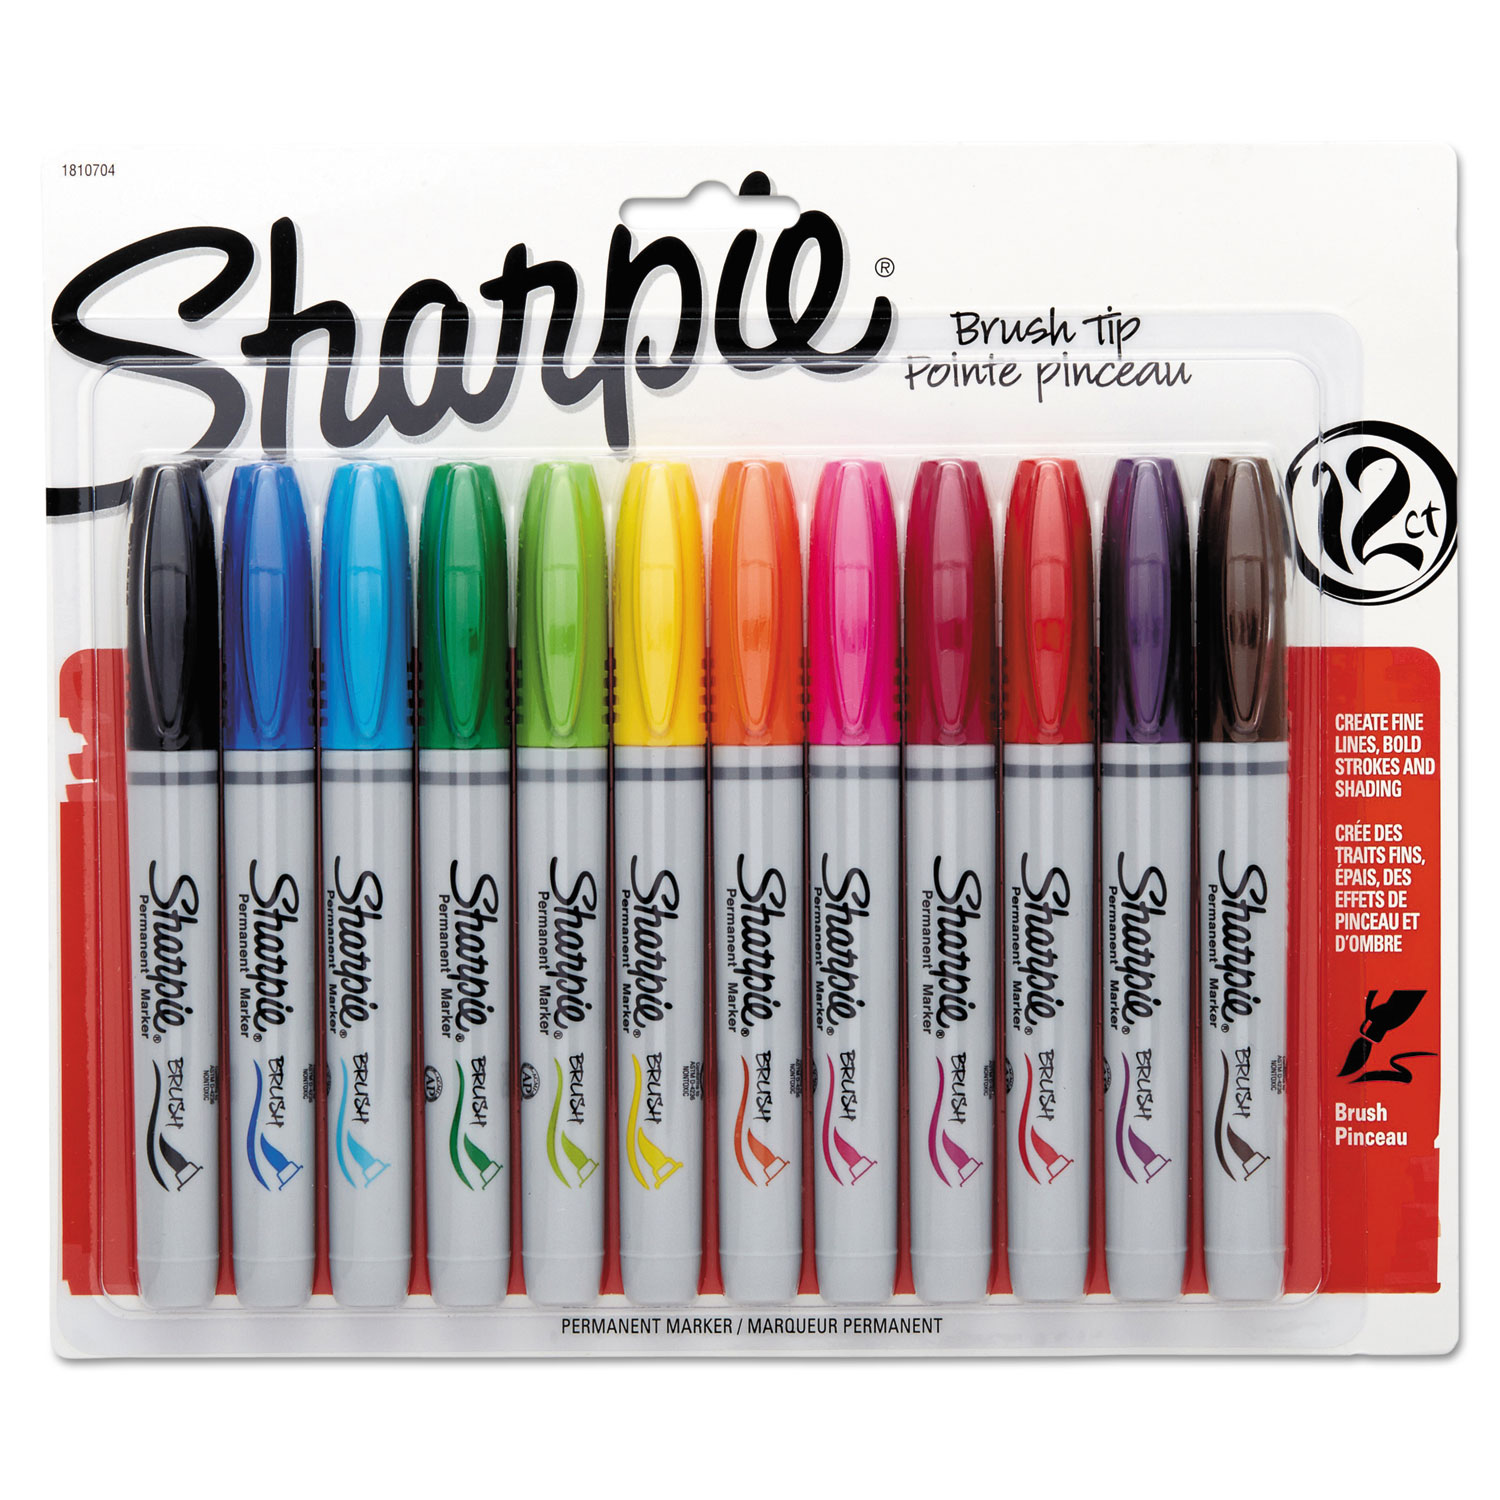  Sharpie 1810704 Brush Tip Permanent Marker, Medium, Assorted Colors, 12/Set (SAN1810704) 